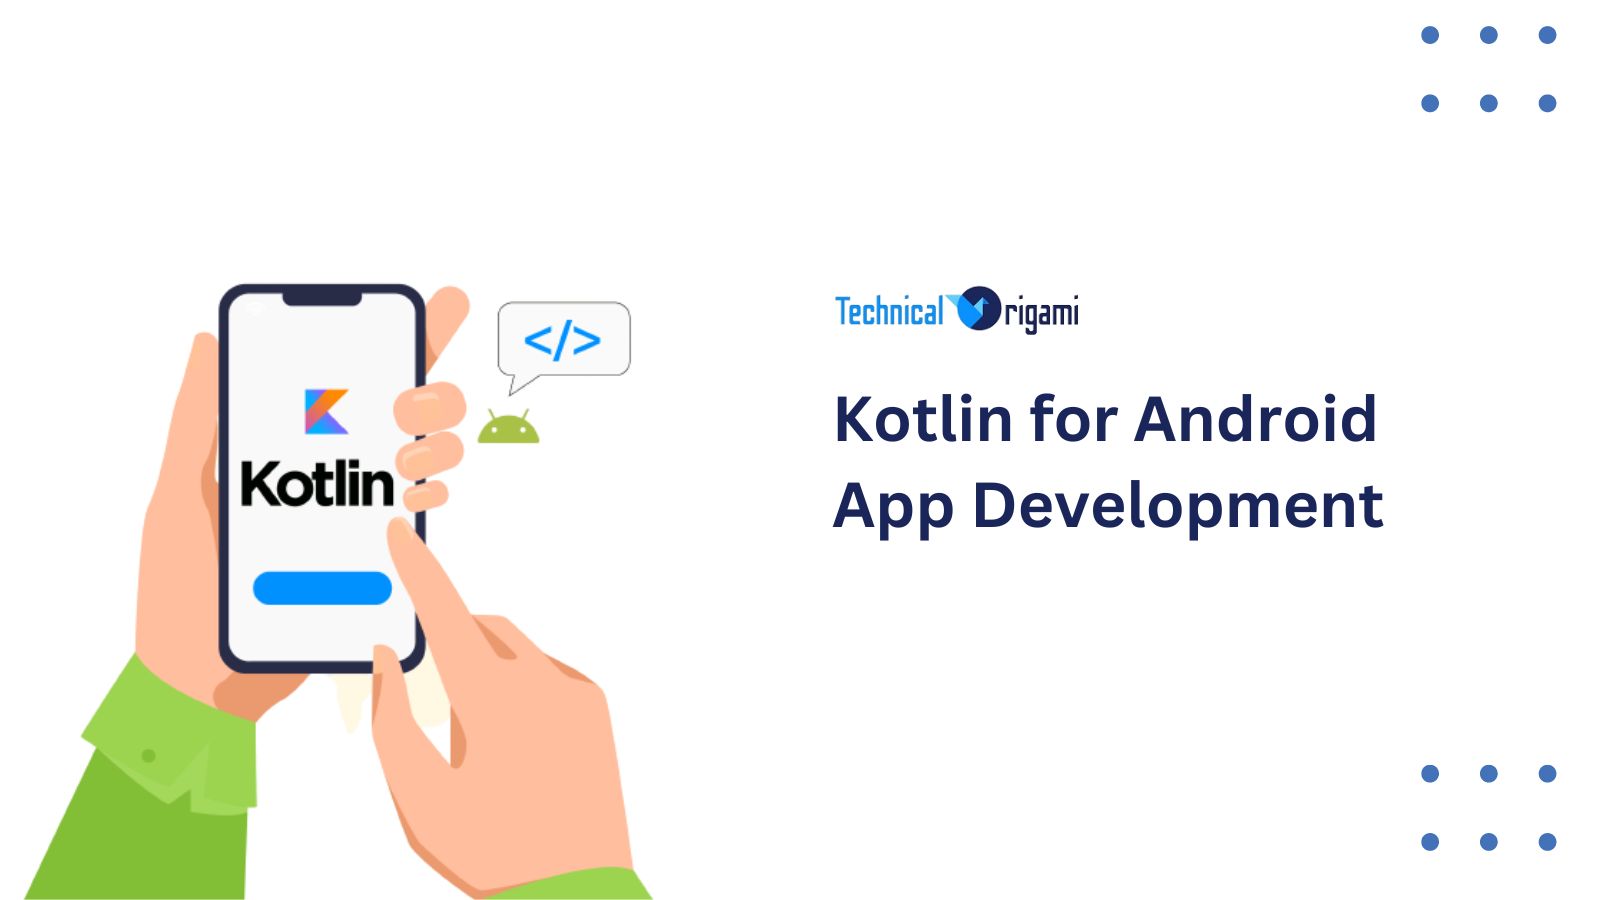 Kotlin for Android App Development | Technical origami